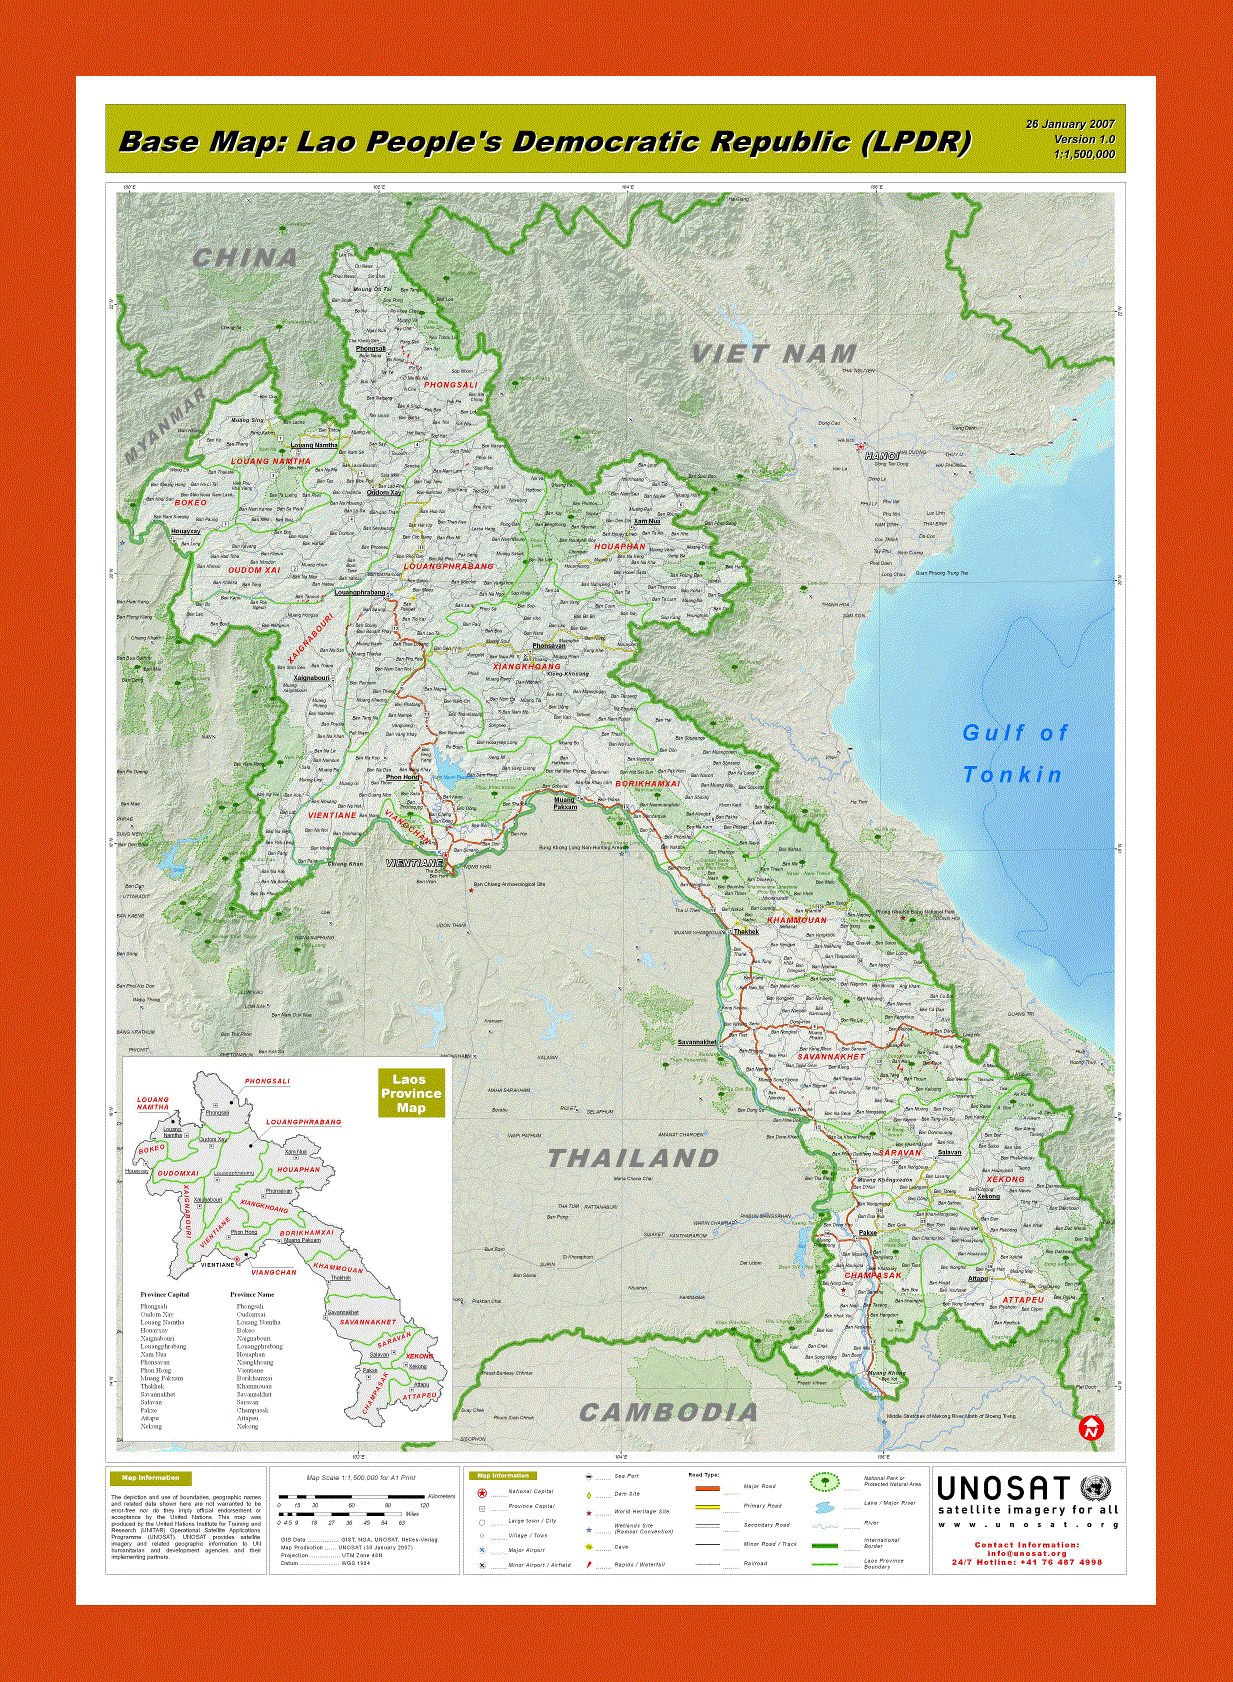 Base map of Laos